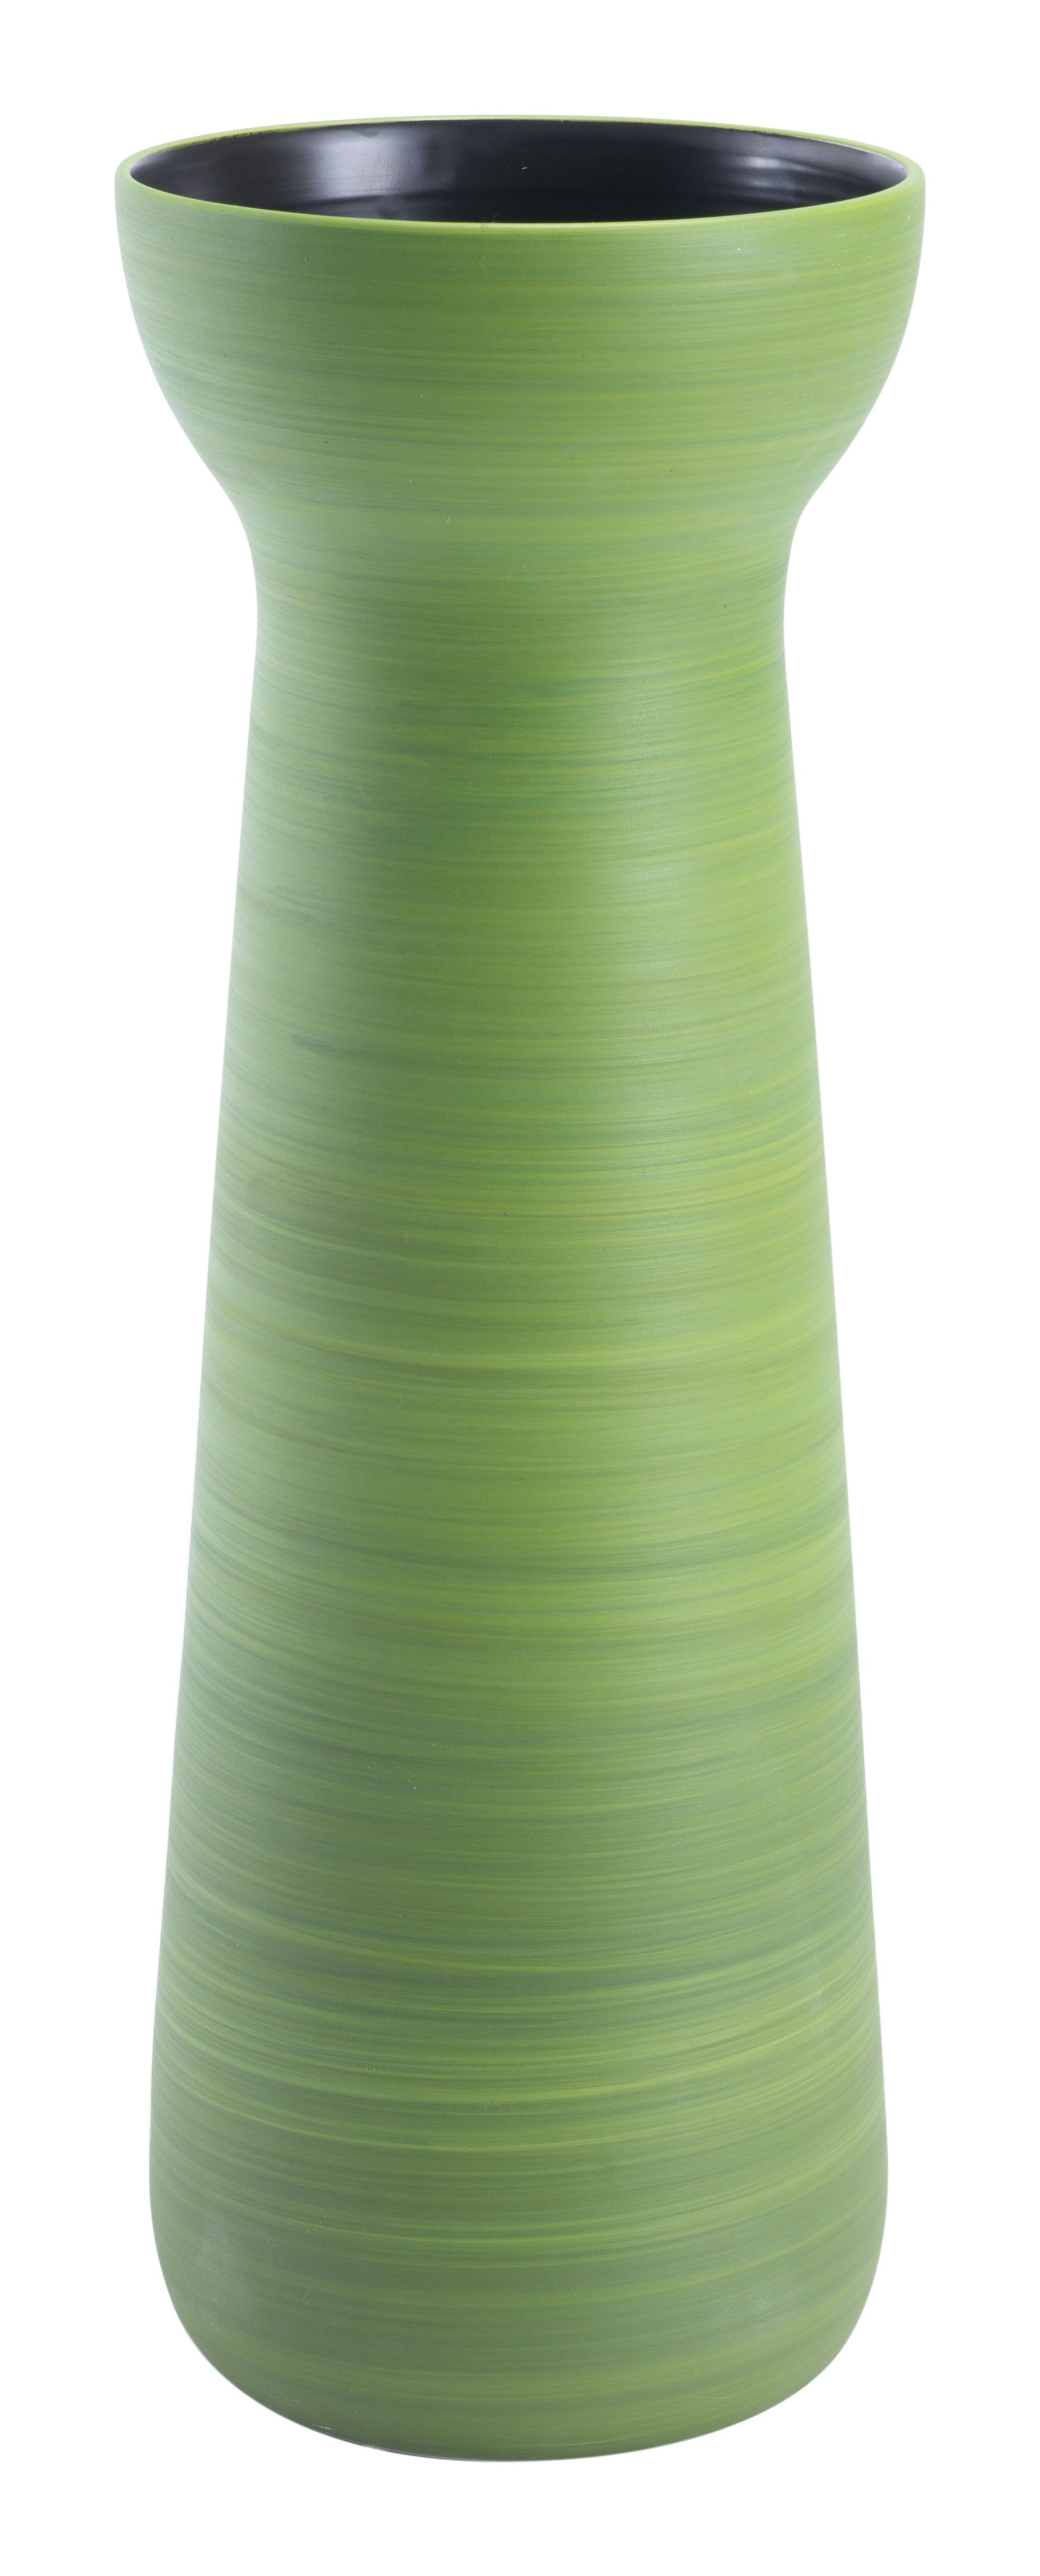 Zuo Modern Areca tall vase